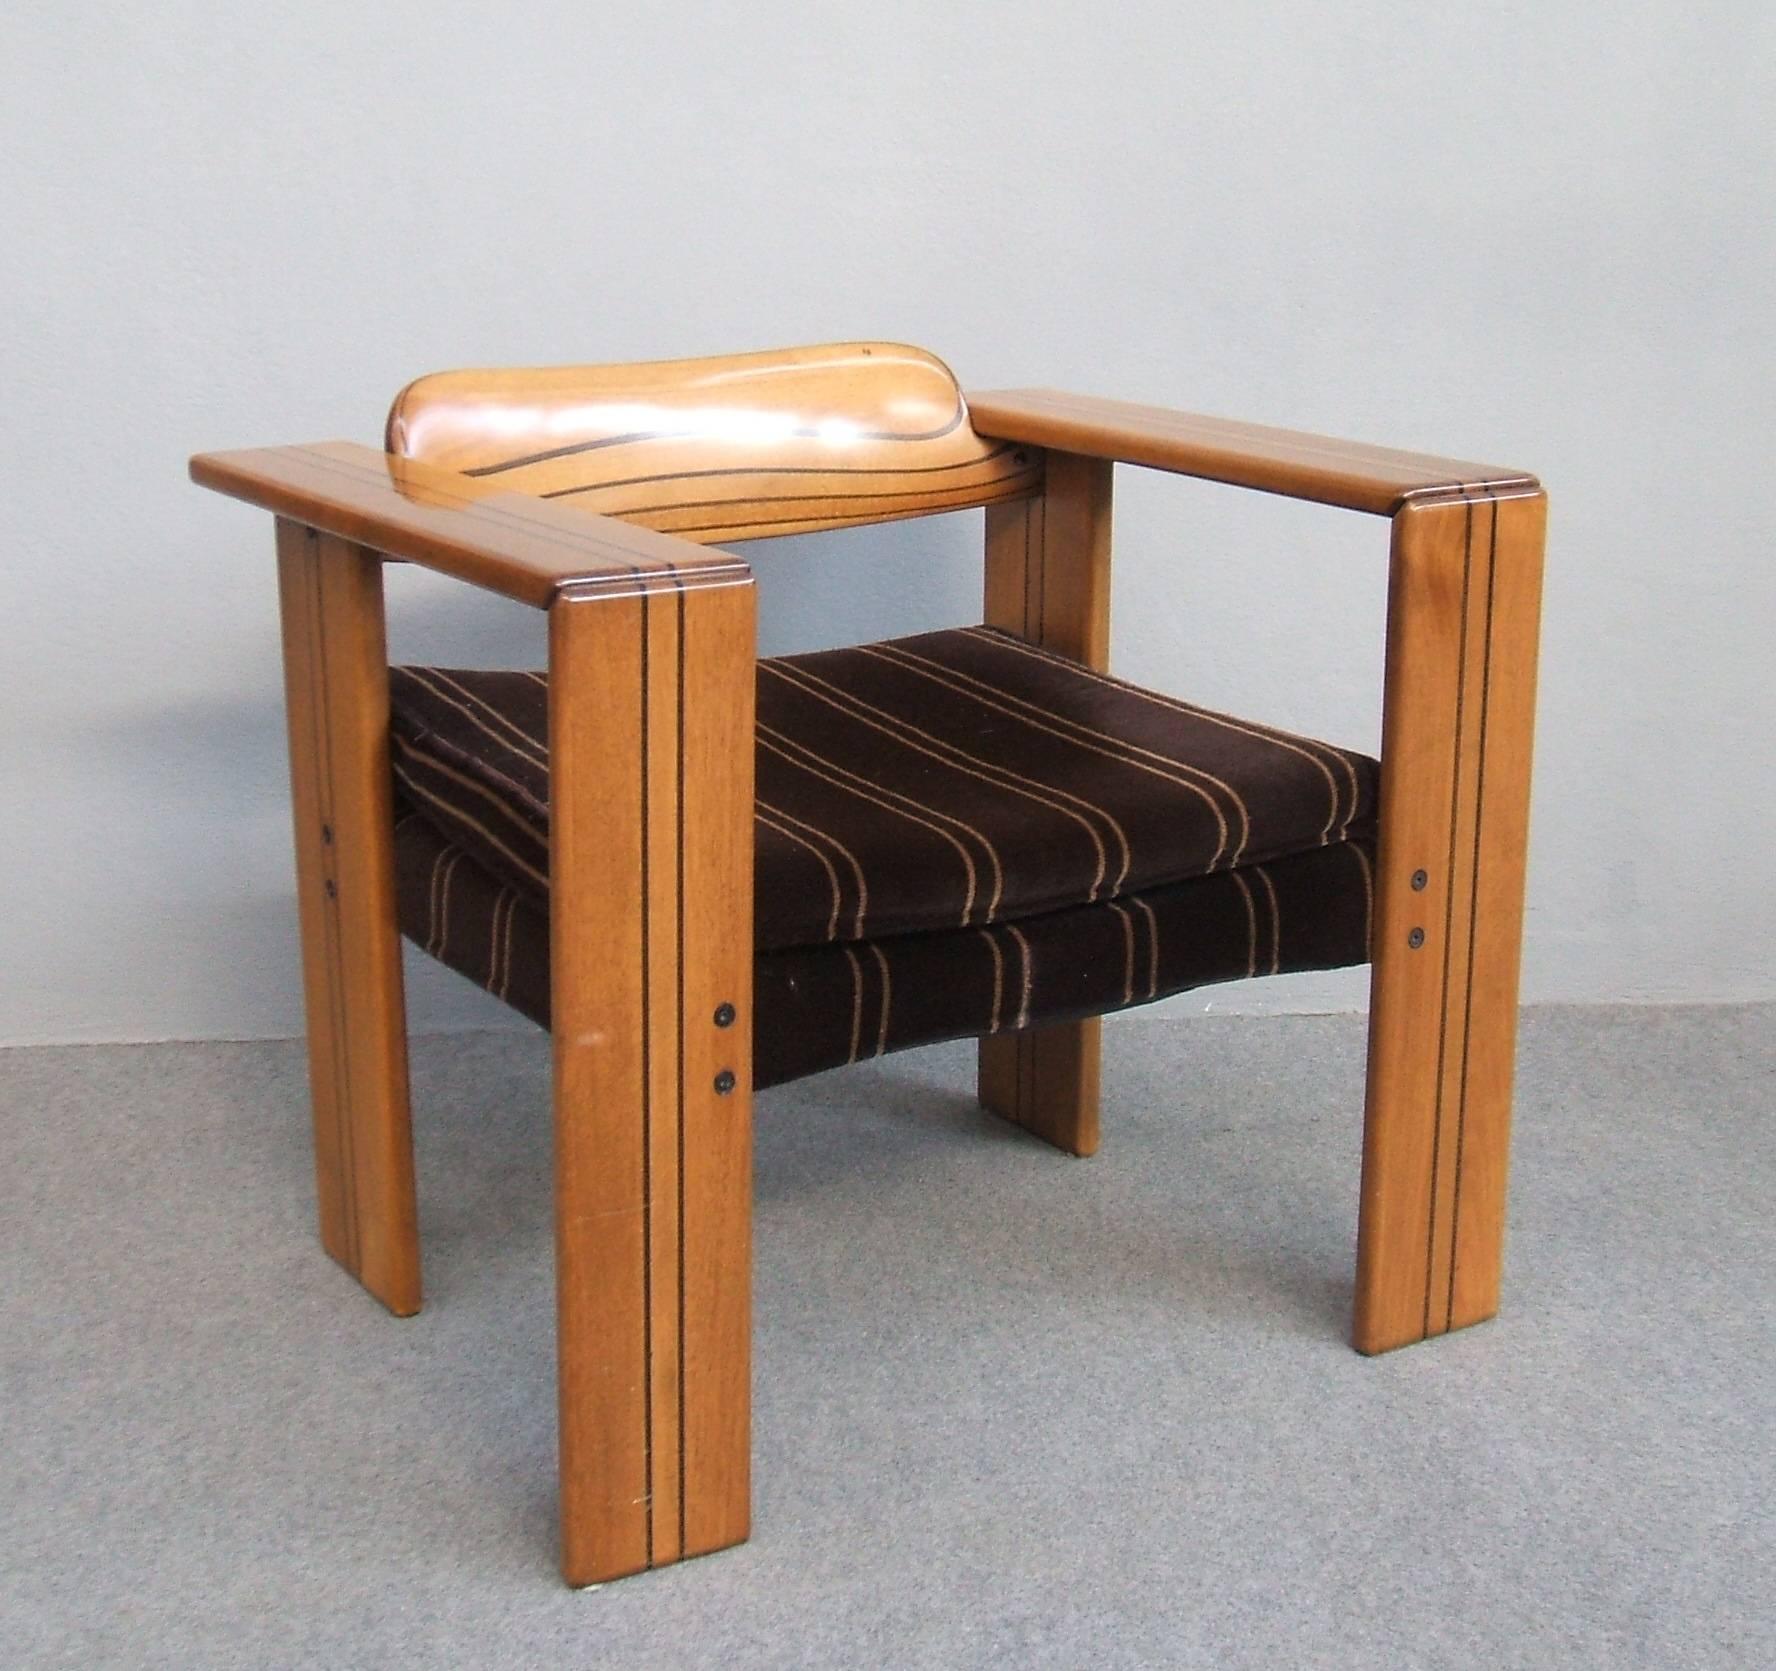 Four Artona armchairs designed by Afra and Tobia Scarpa, Maxalto 1975.
Walnut and original brown velvet upholstery.
Literature: Afra e Tobia Scarpa: Architetti e Designers, Piva, pag. 146